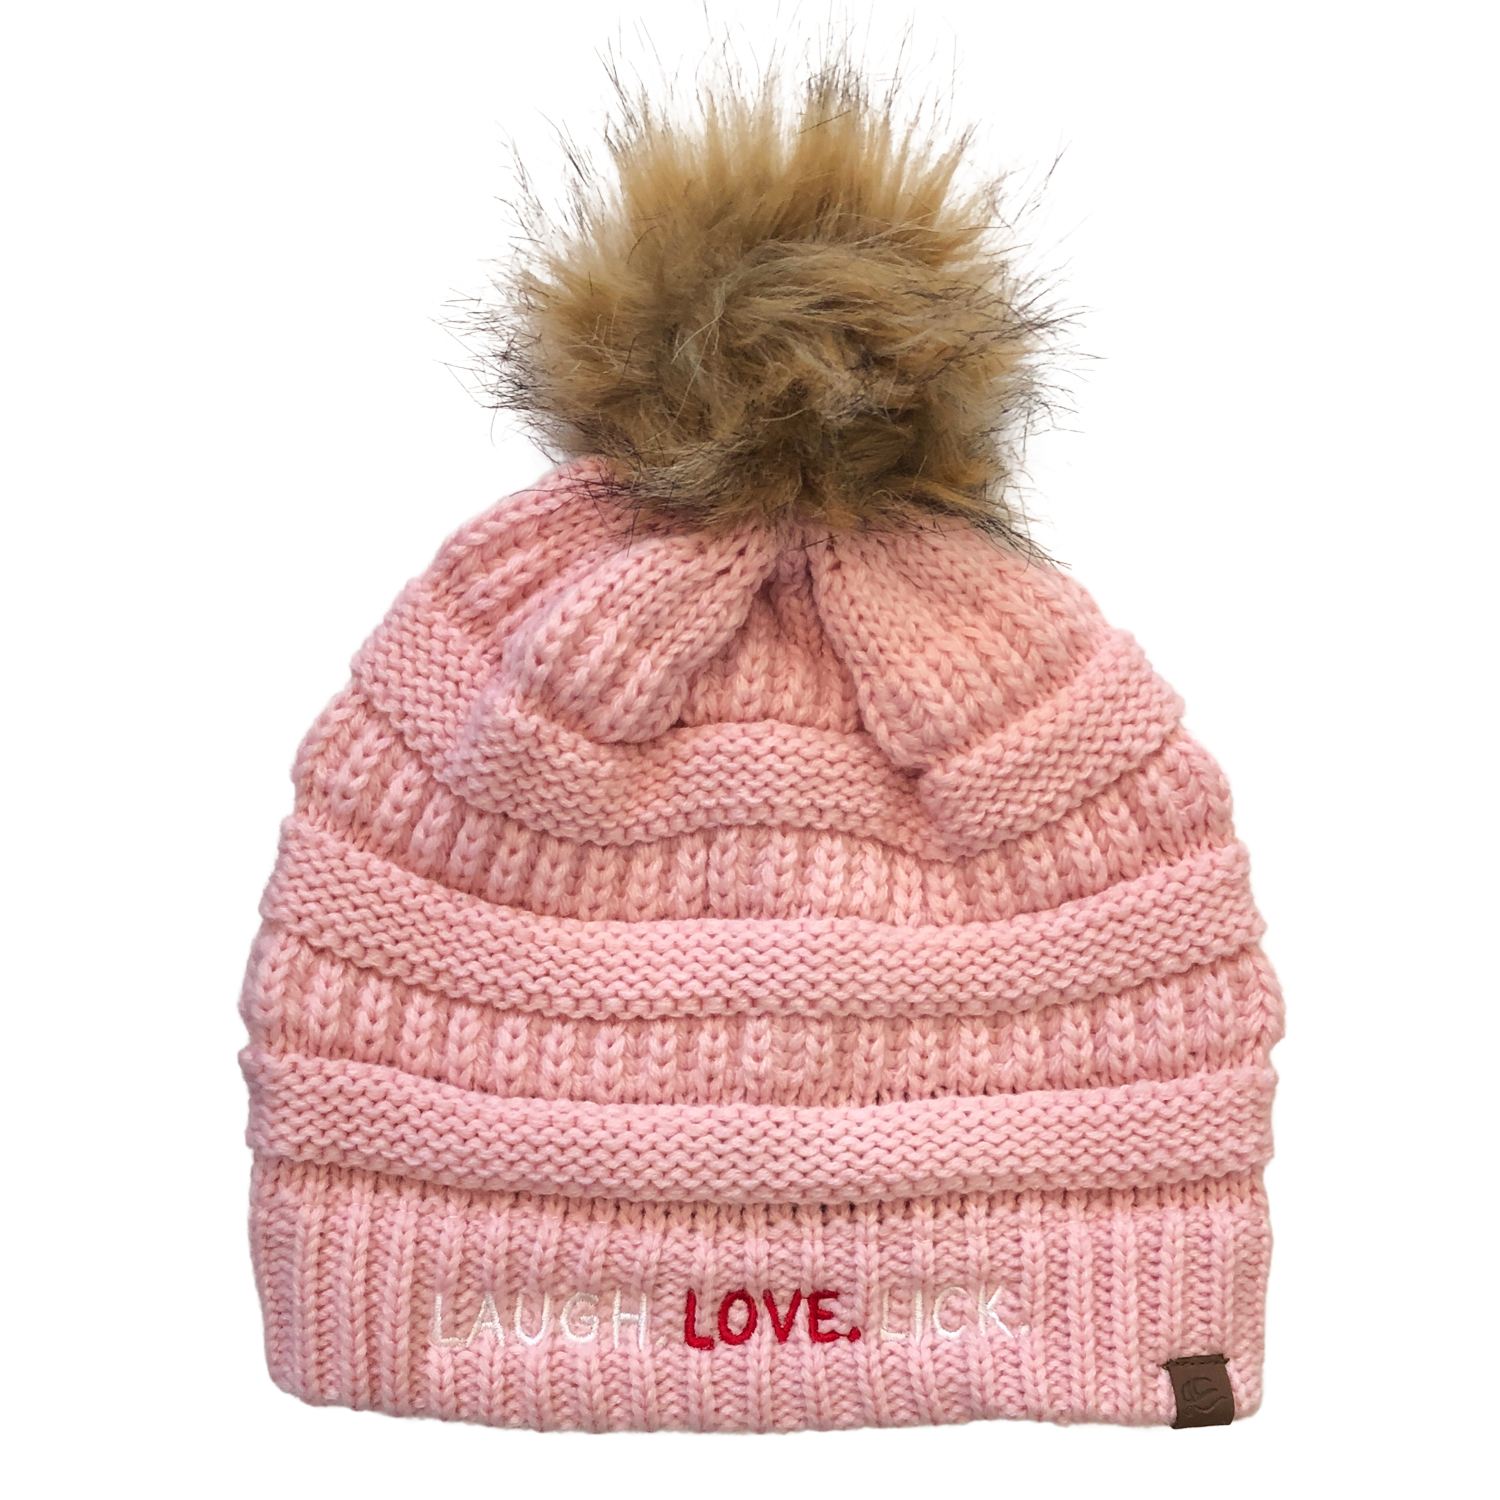 Beau Tyler - Laugh Love Lick winter knit hat faux pom pink 2 front temp